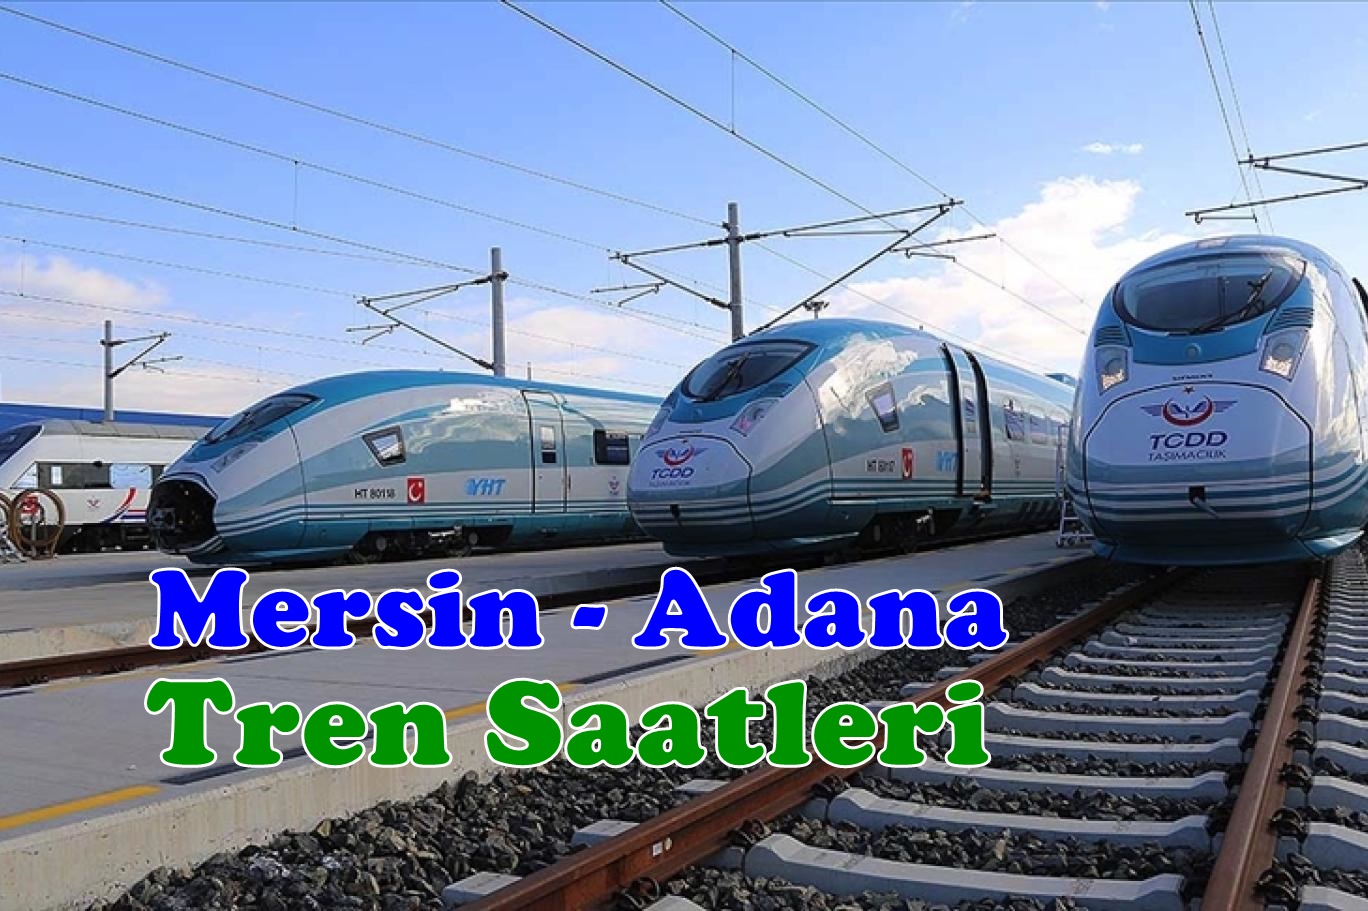 Mersin Adana Tren Saatleri